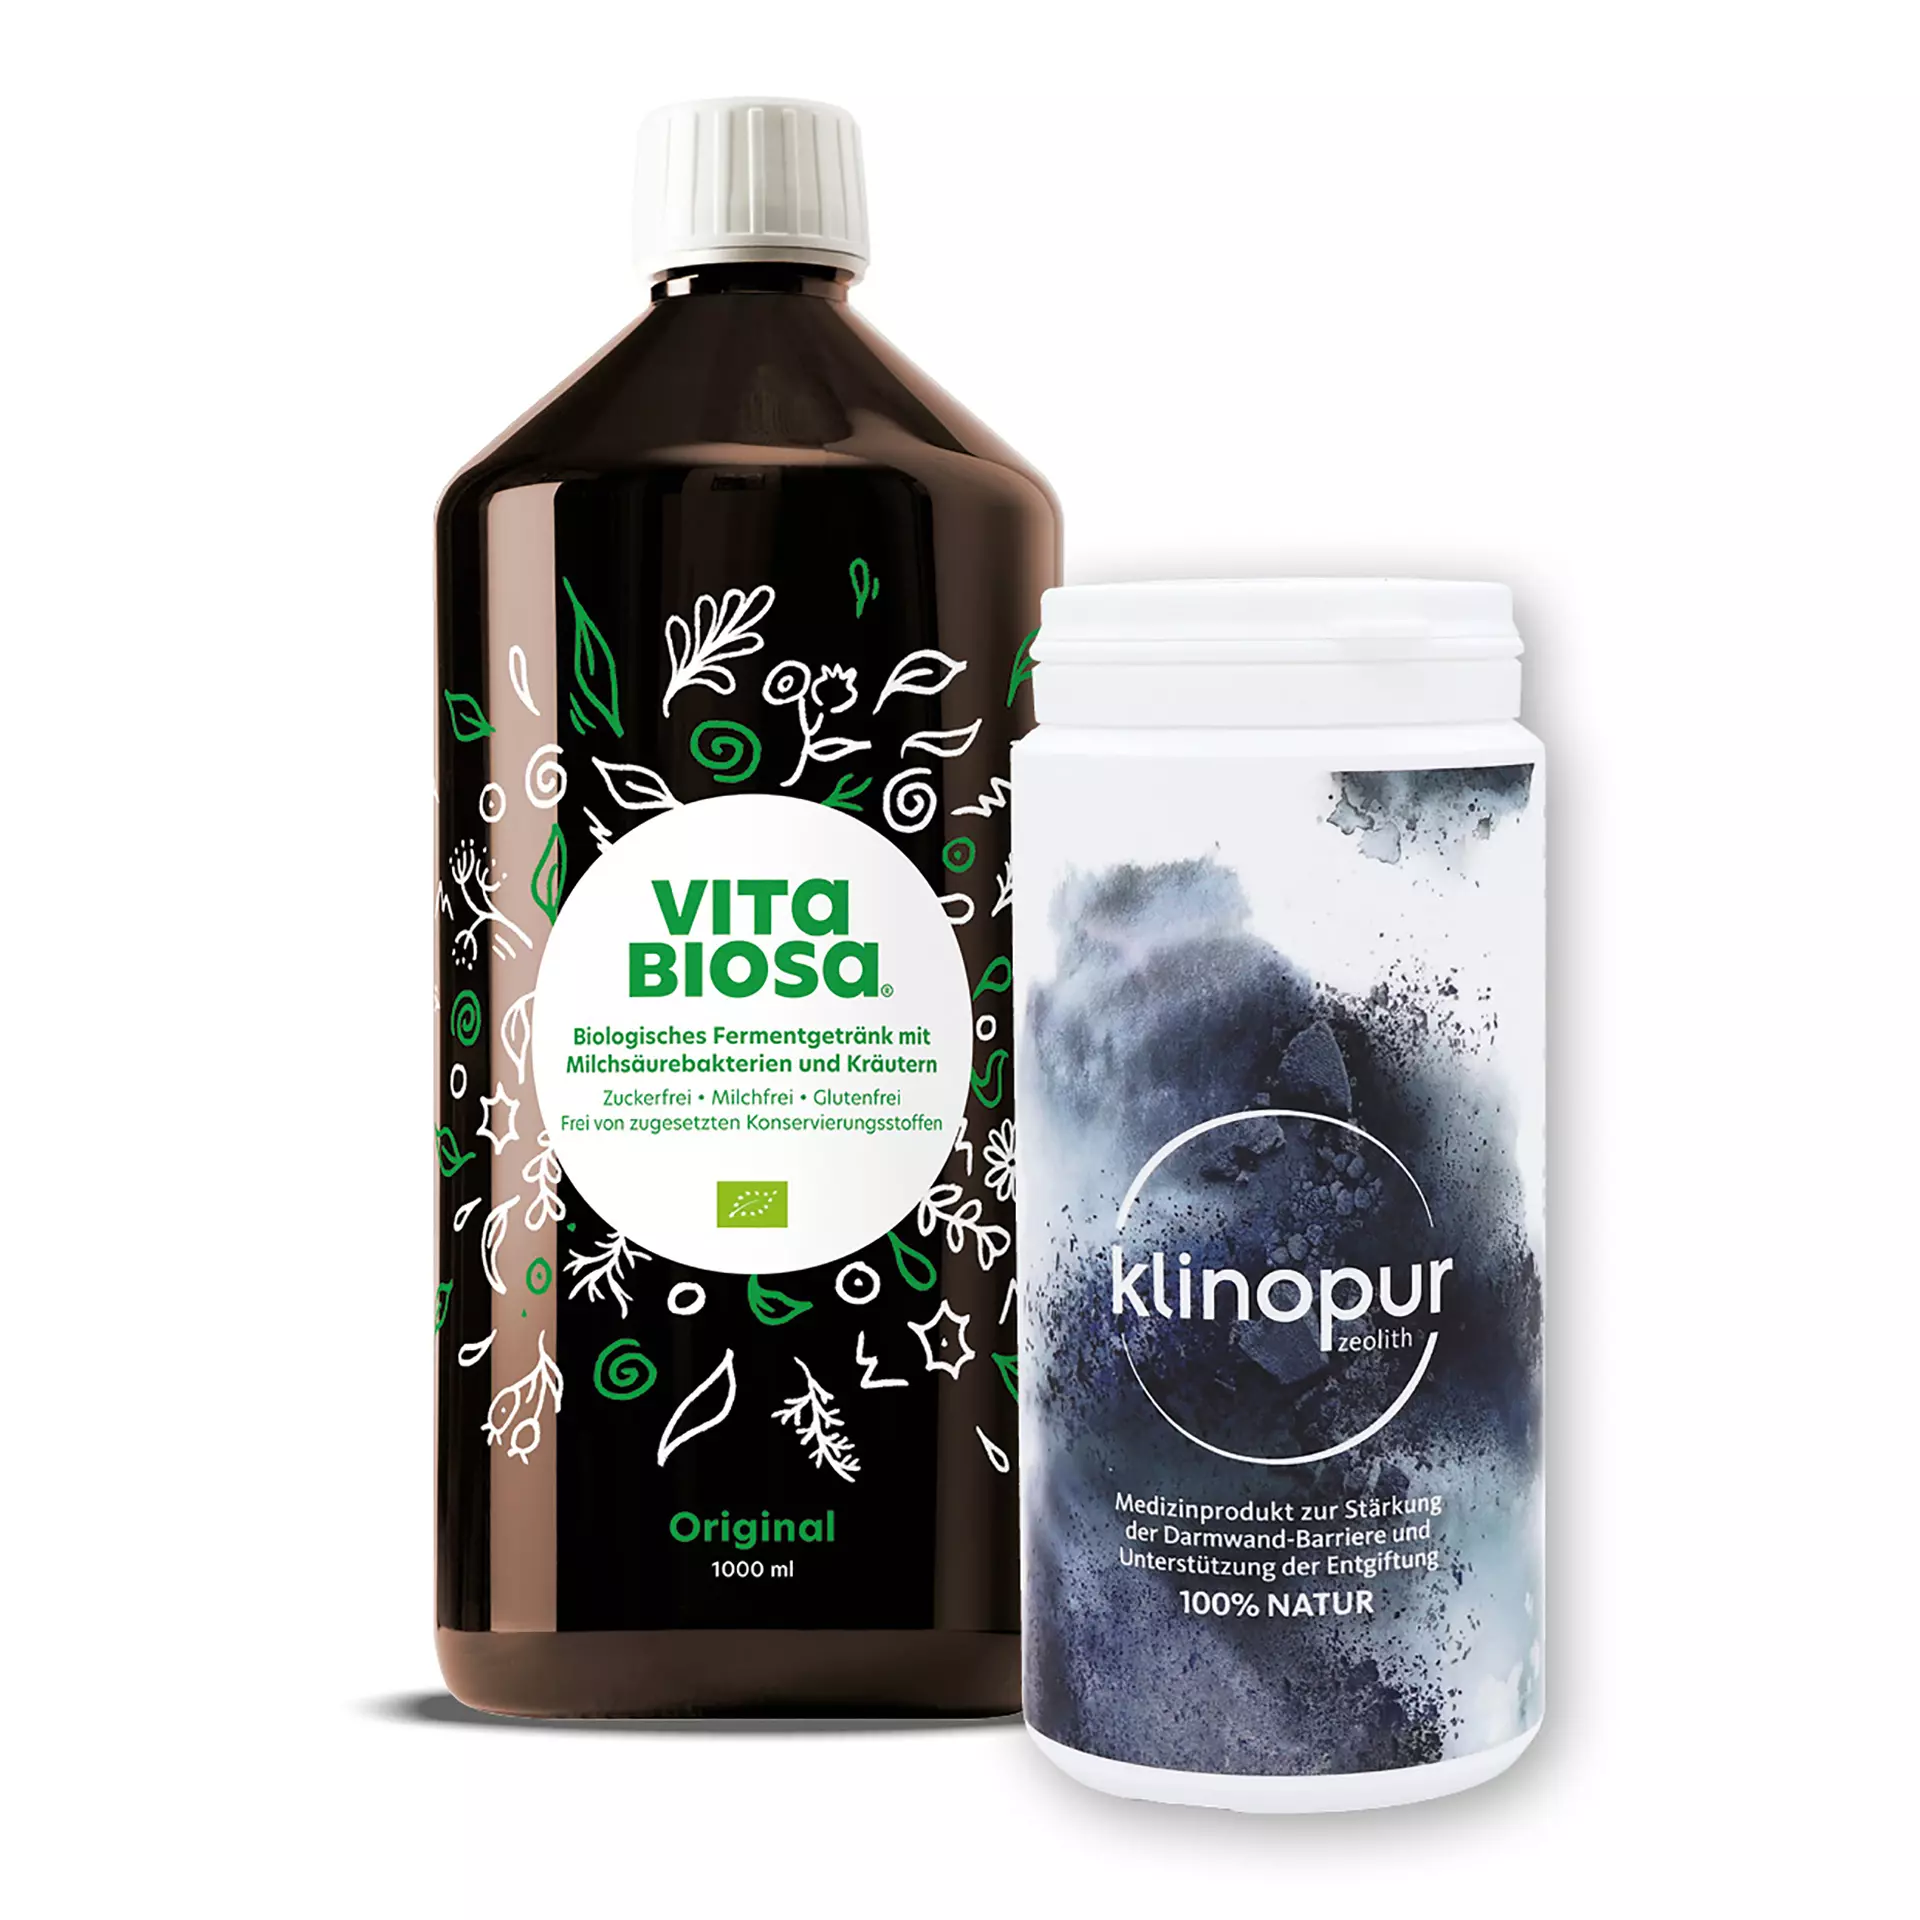 Kombi Angebot: Vita Biosa Original 1 L + Klinopur 150g